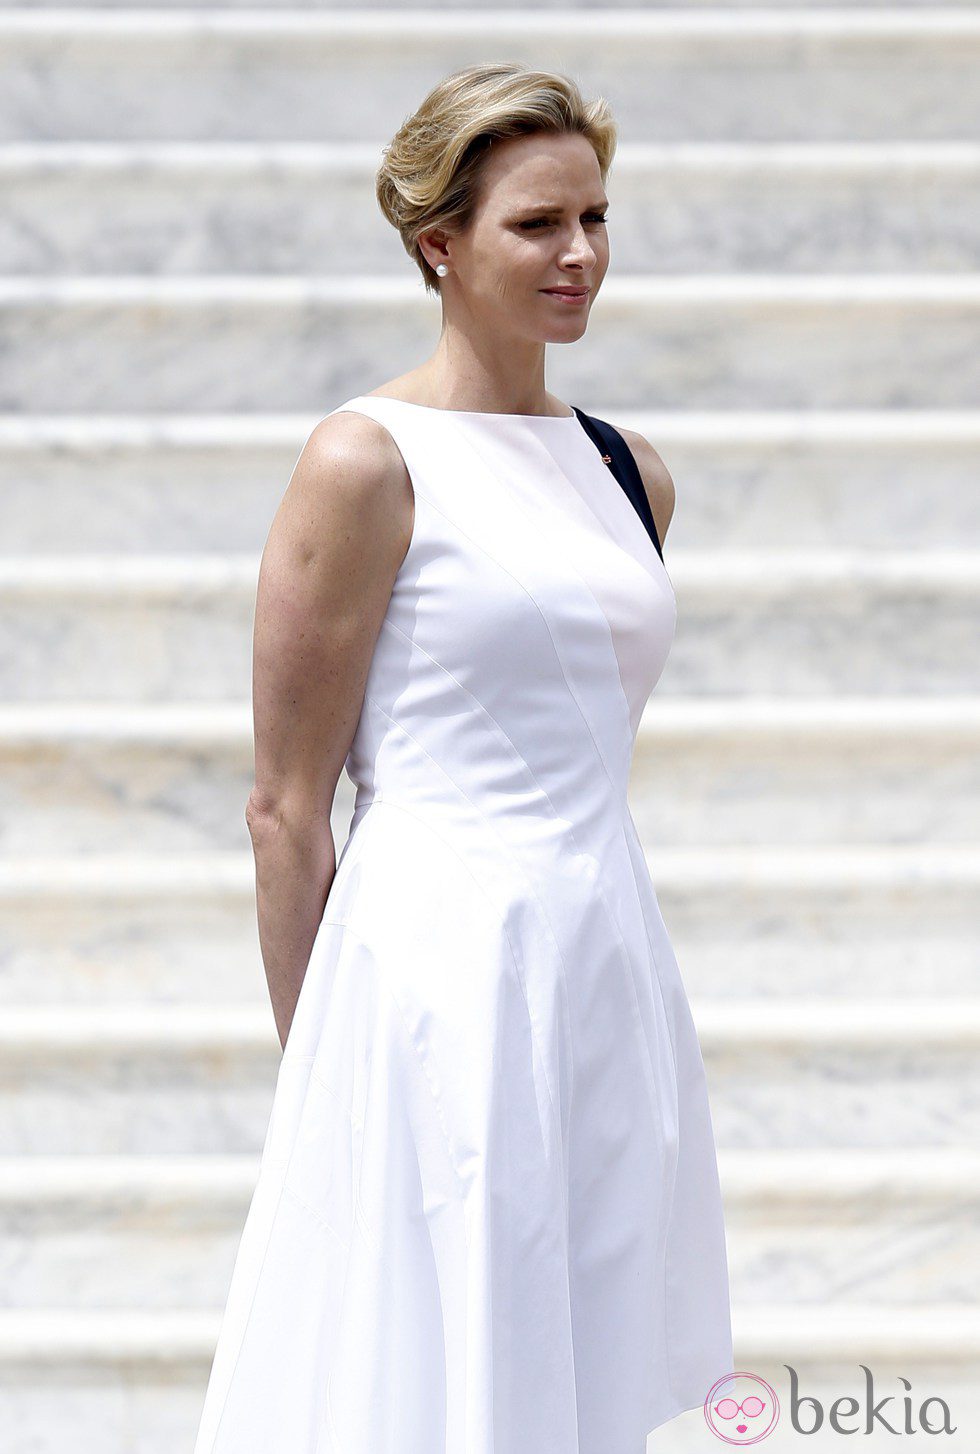 La Princesa Charlene con un vestido blanco puro de corte baby-doll